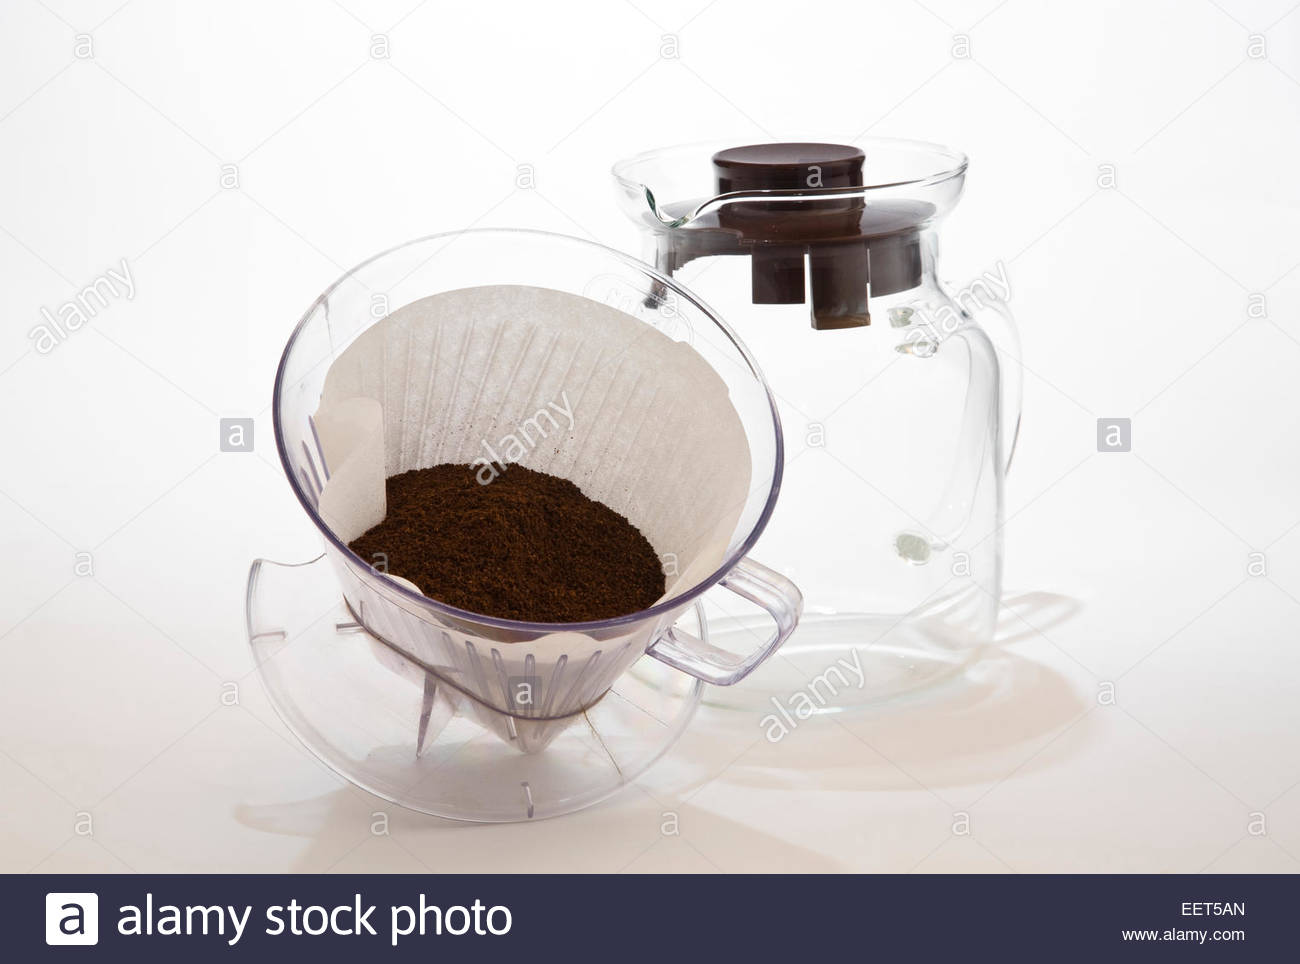 coffee-percolator-EET5AN.jpg